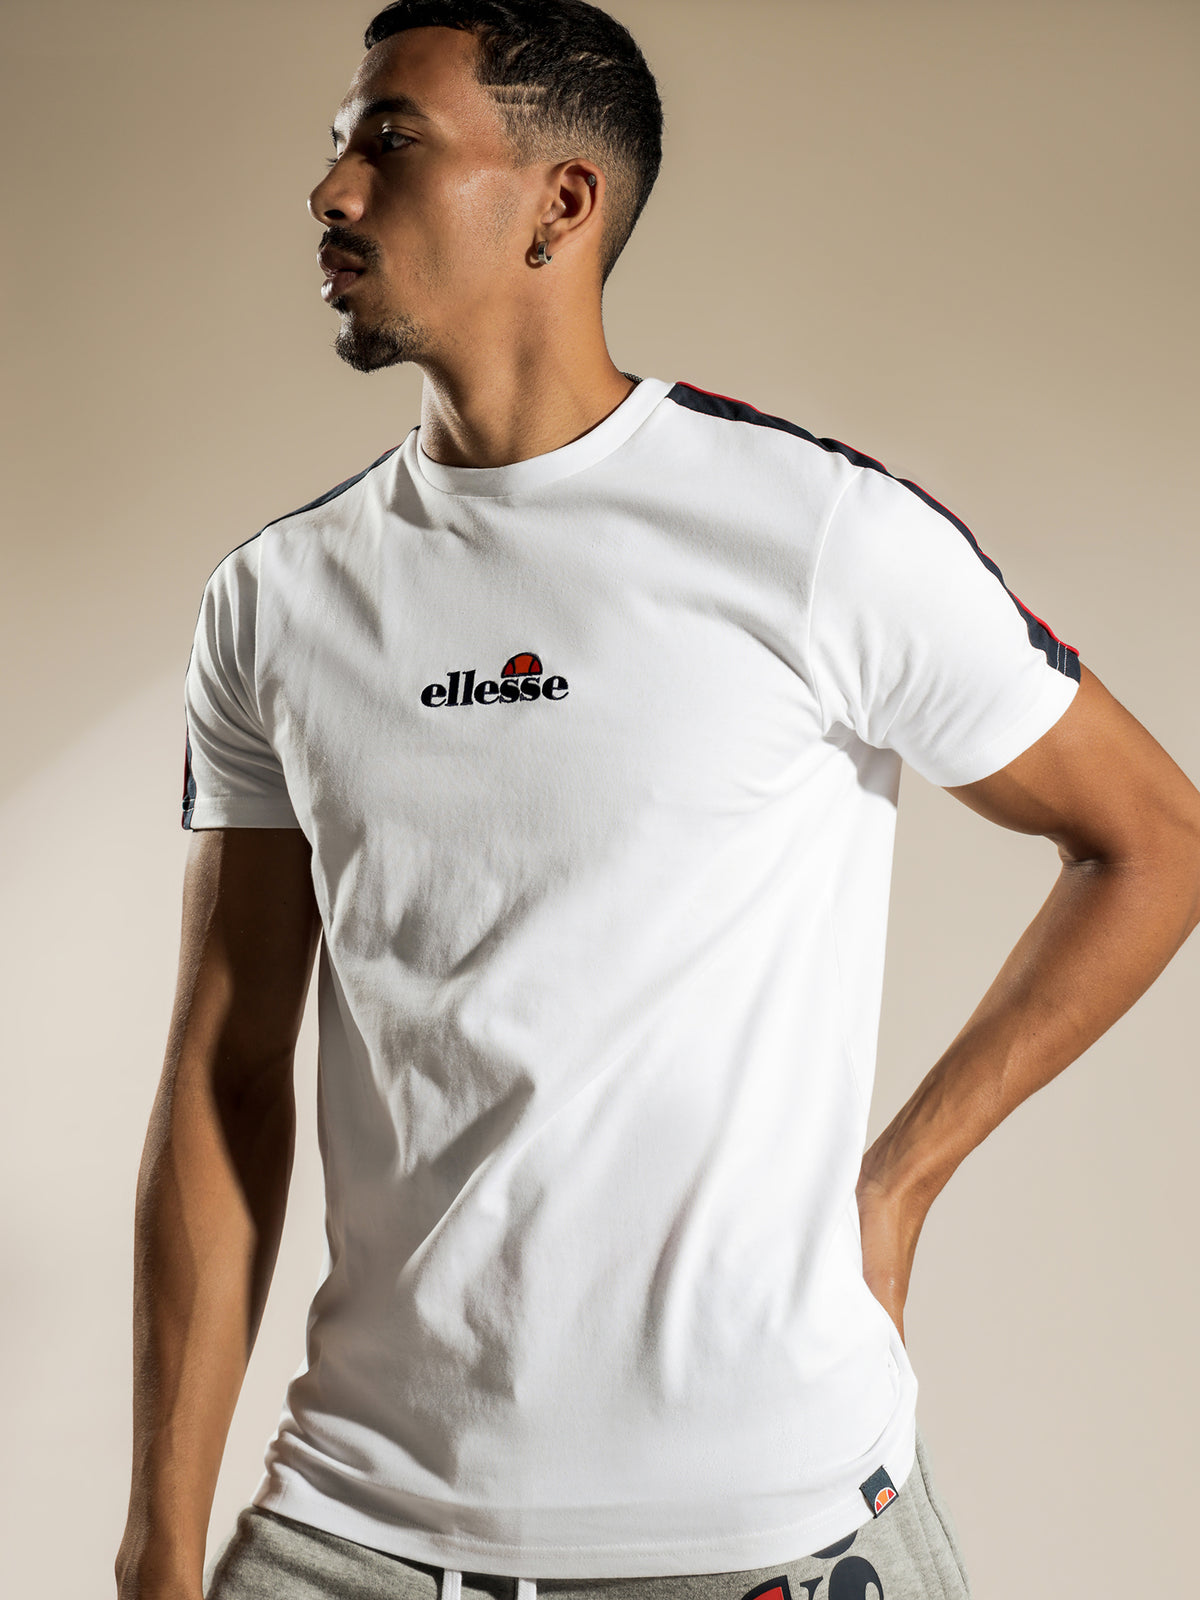 Carcano T-Shirt in White &amp; Navy